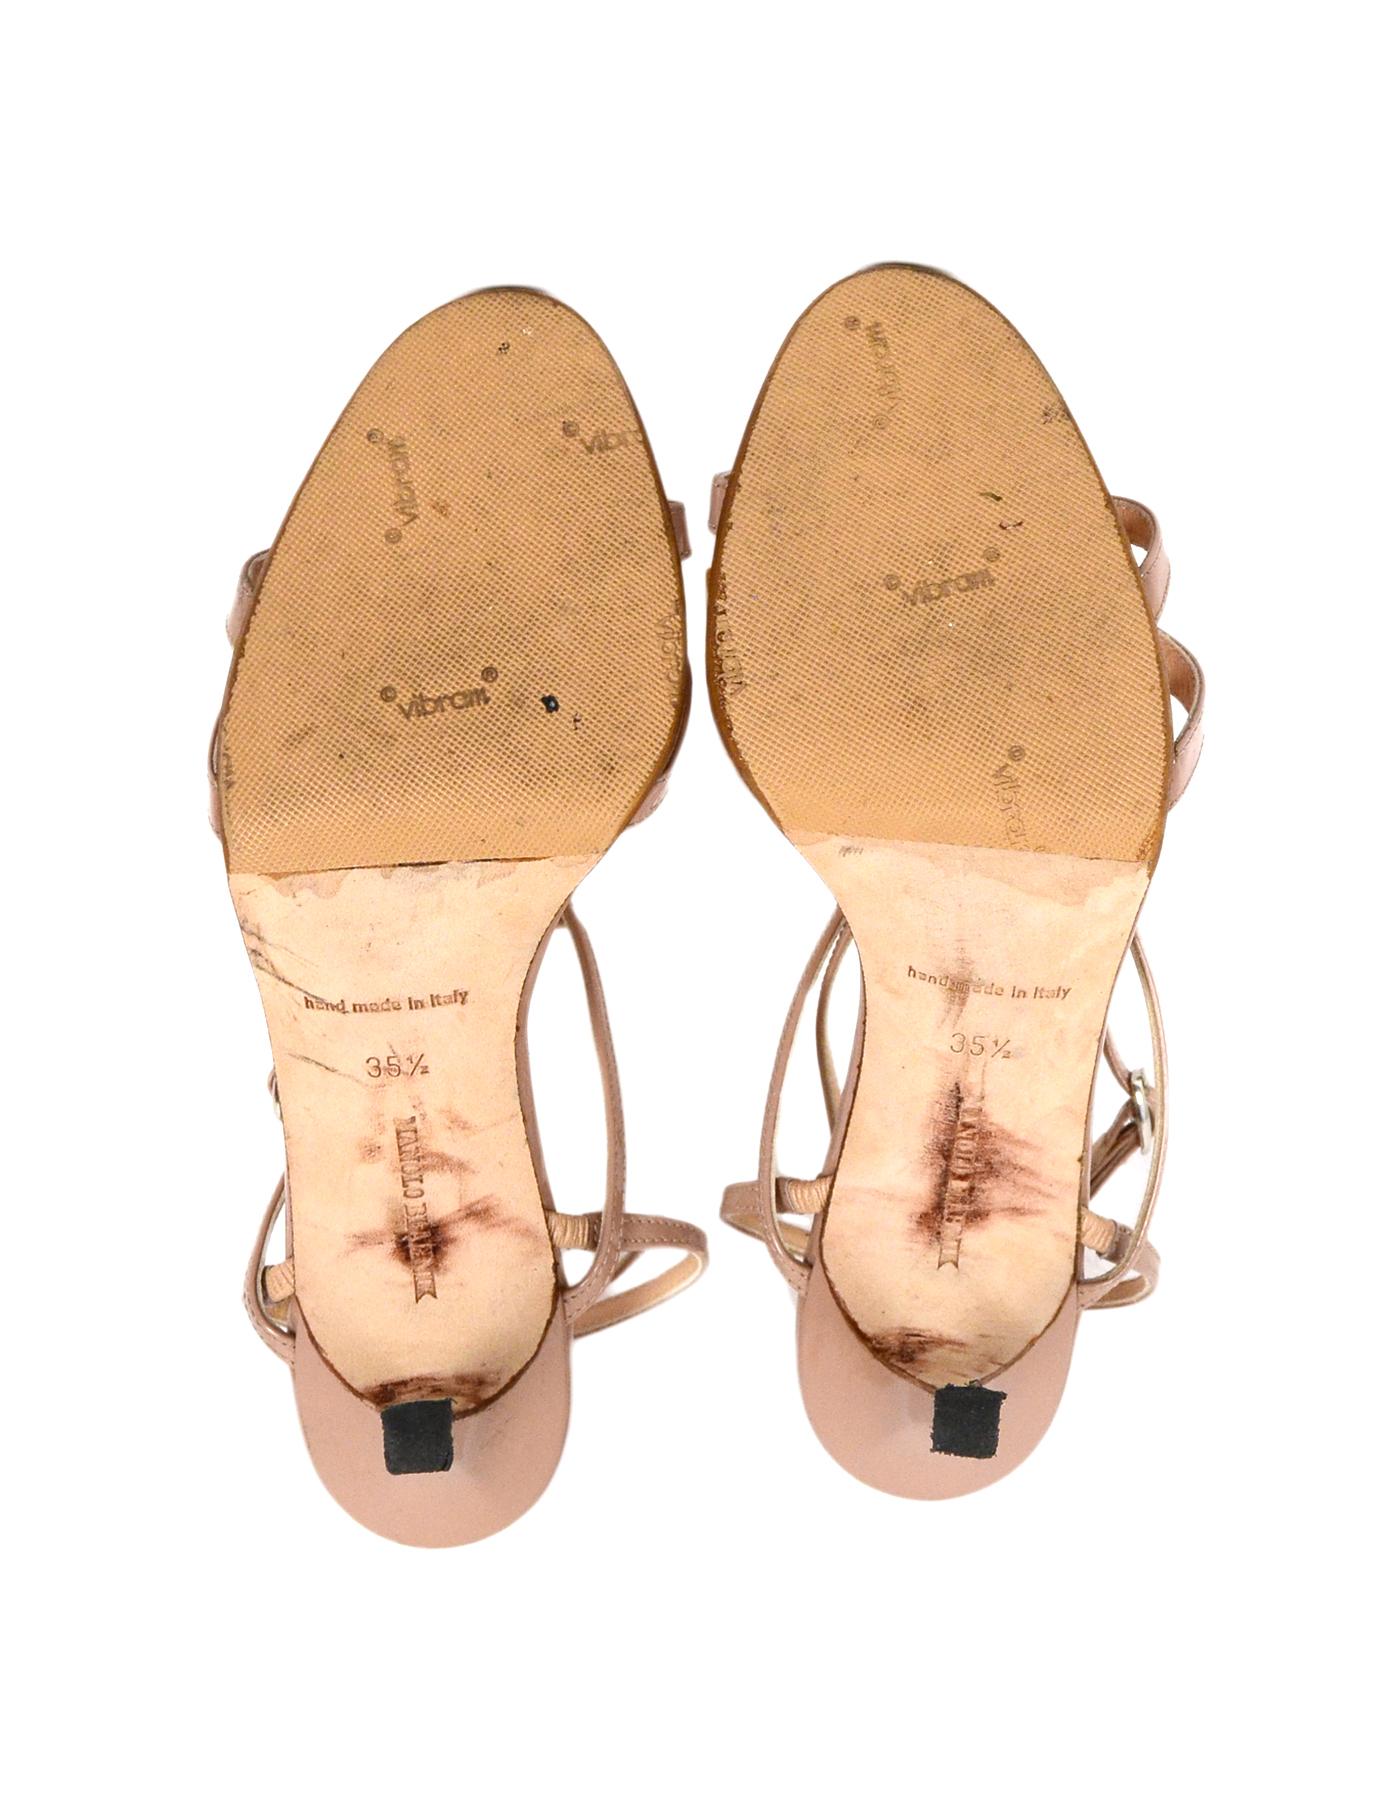 Women's Manolo Blahnik Nude Patent Leather Strappy Heel Sandals Sz 35.5